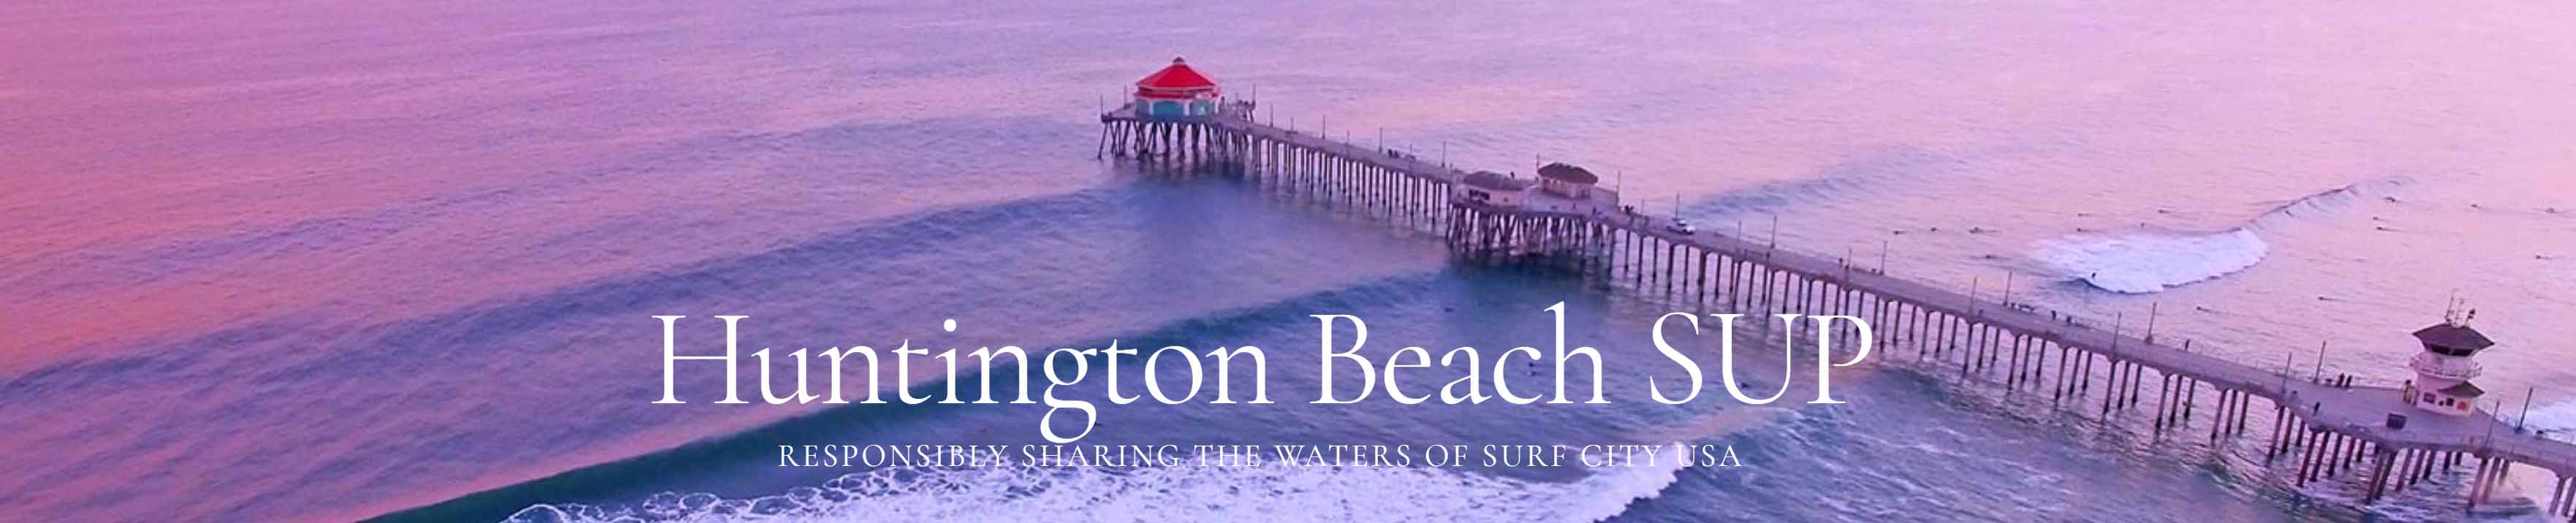 Contact Huntington Beach SUP